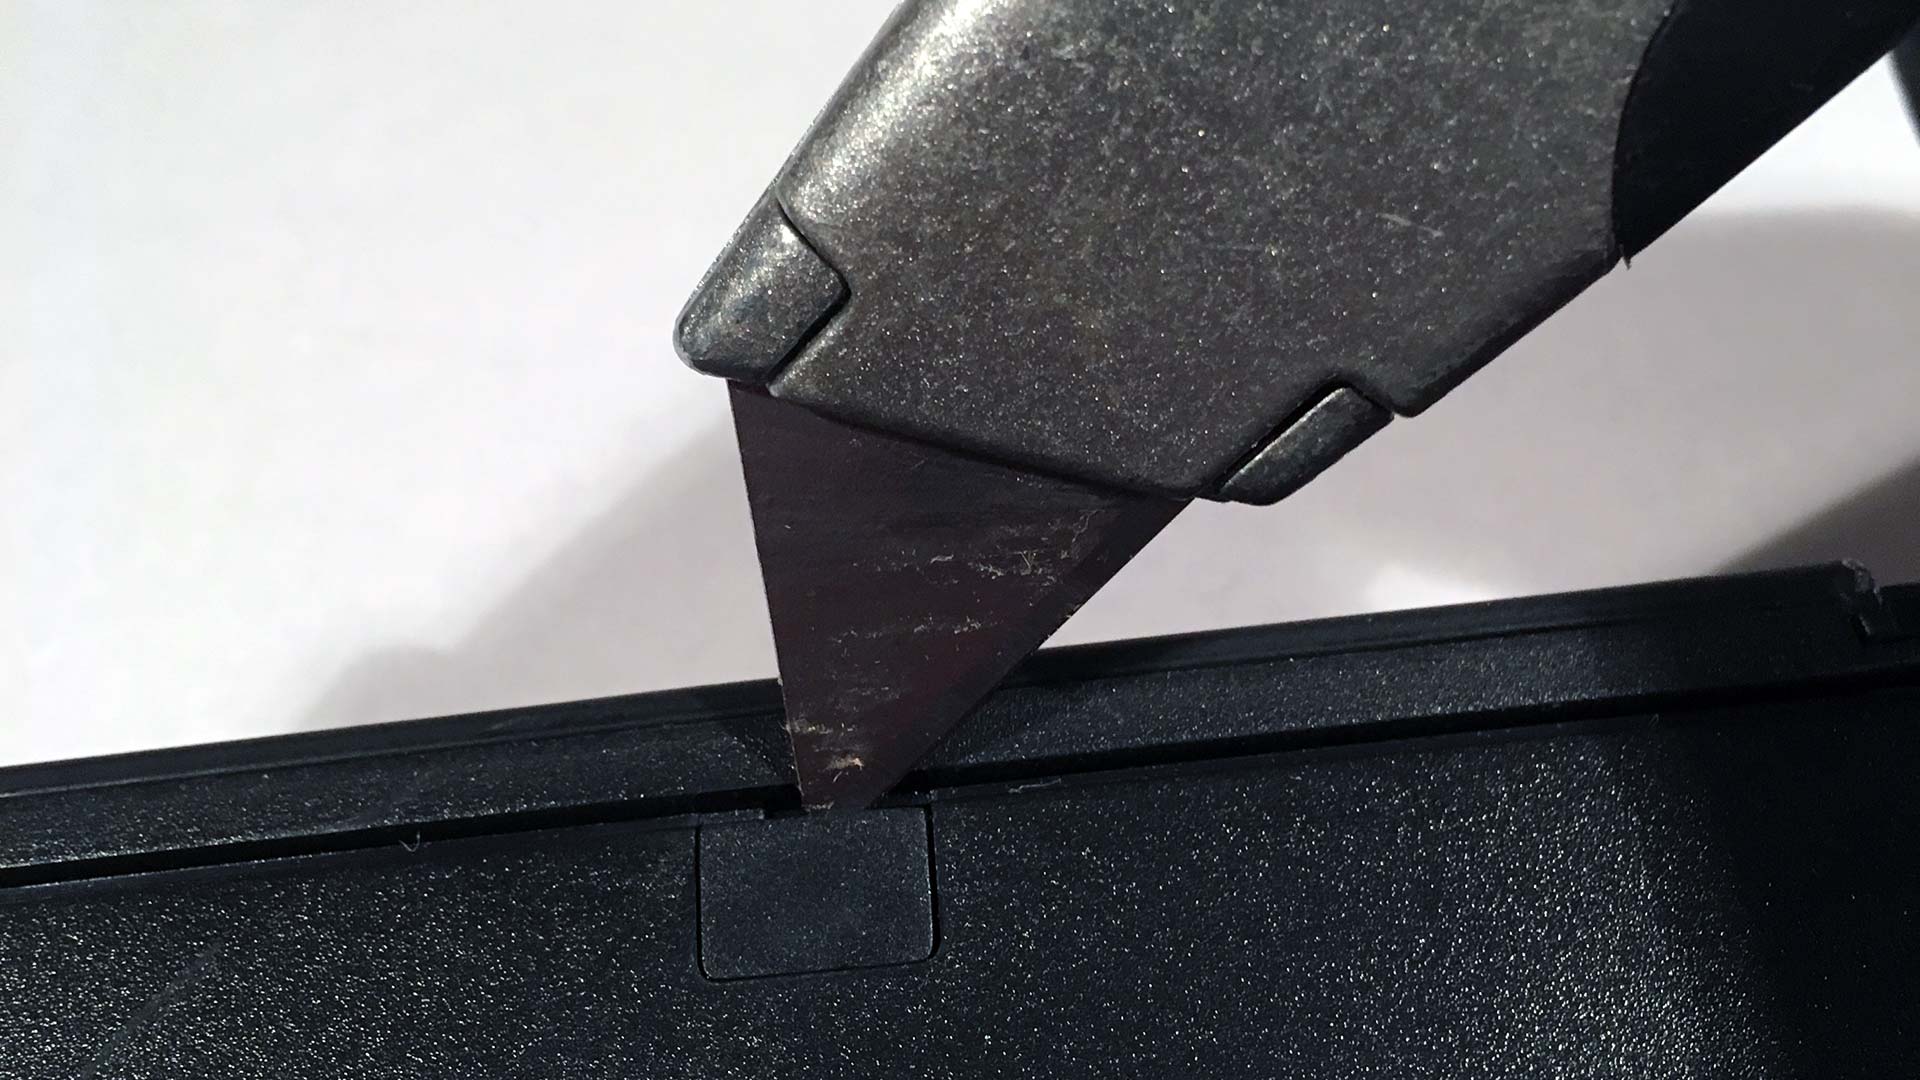 Razer Blackwidow 2014 disassembly - Using knife to undo clips